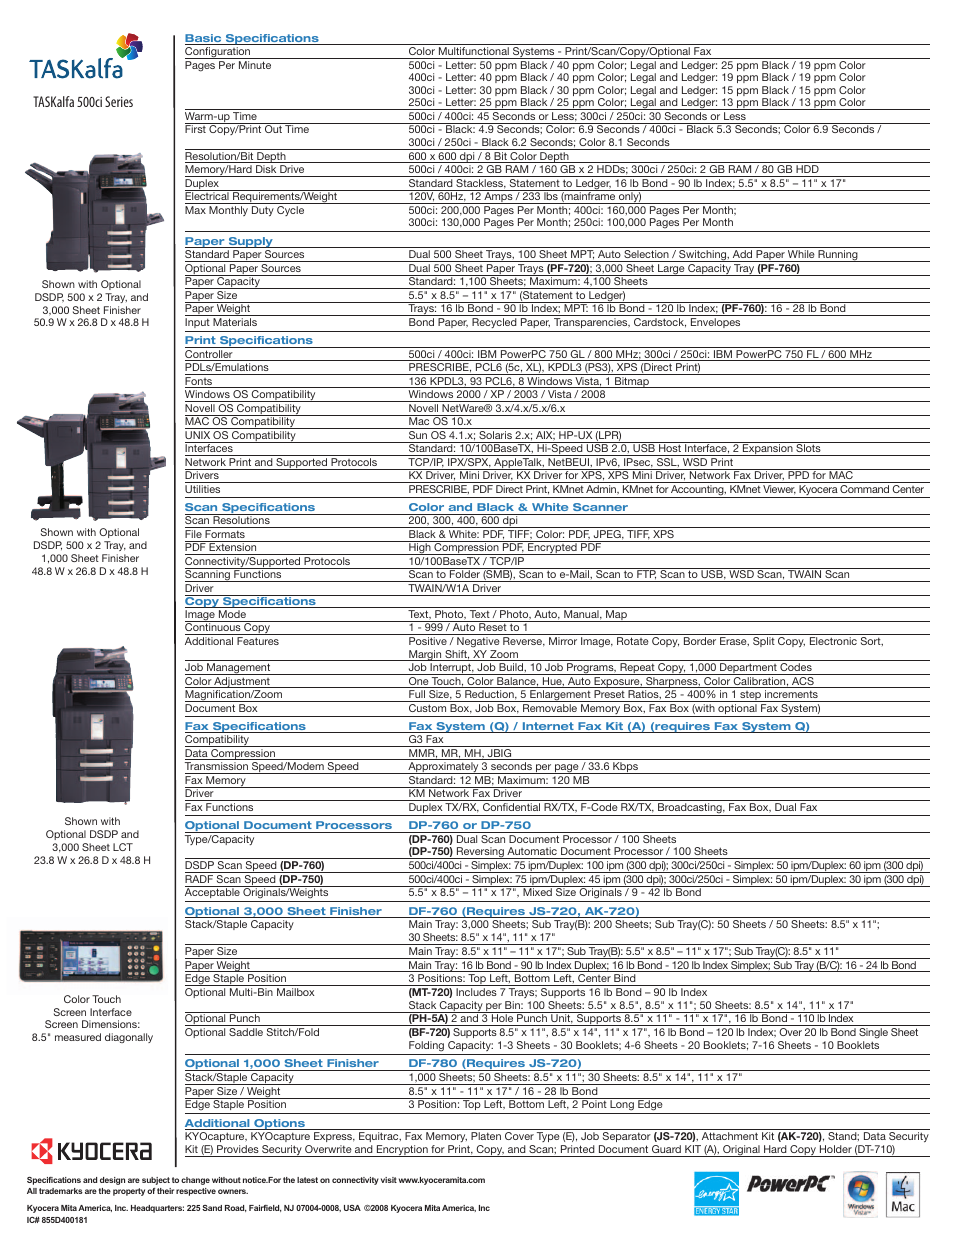 Taskalfa 500ci series | Kyocera TASKalfa 500ci Series User Manual | Page 8 / 8